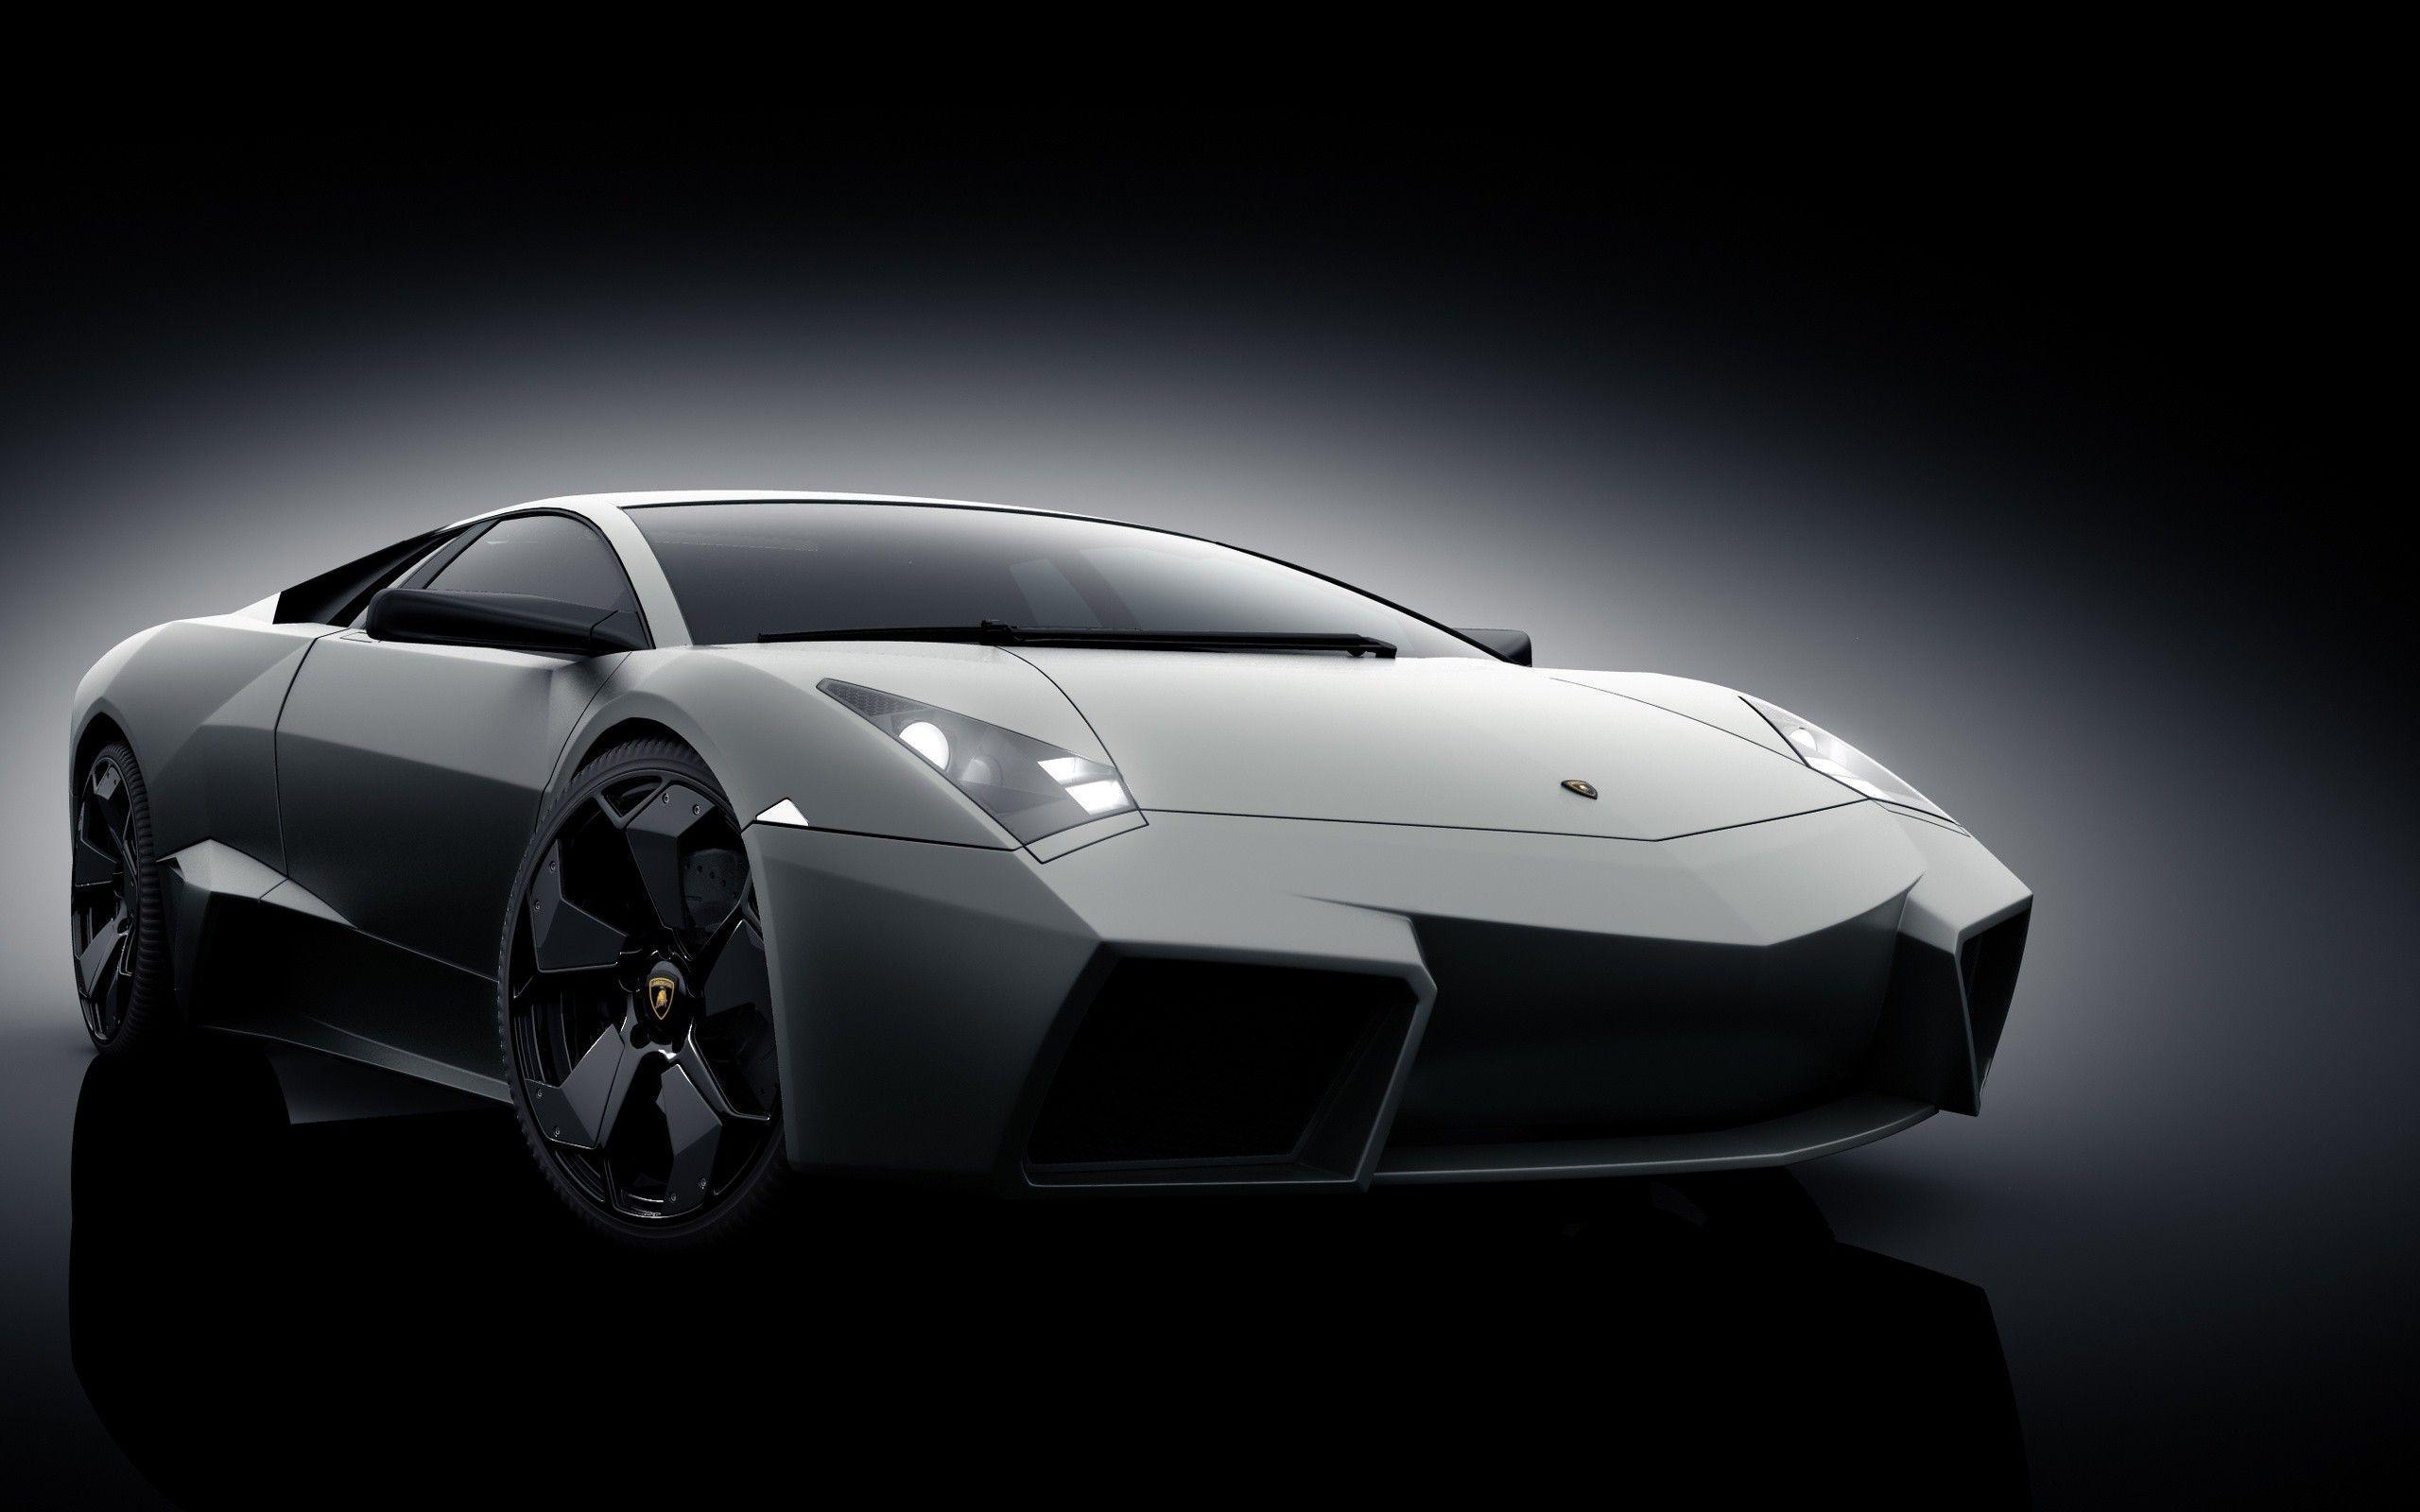 Cool Lamborghini Car (id: 22286)